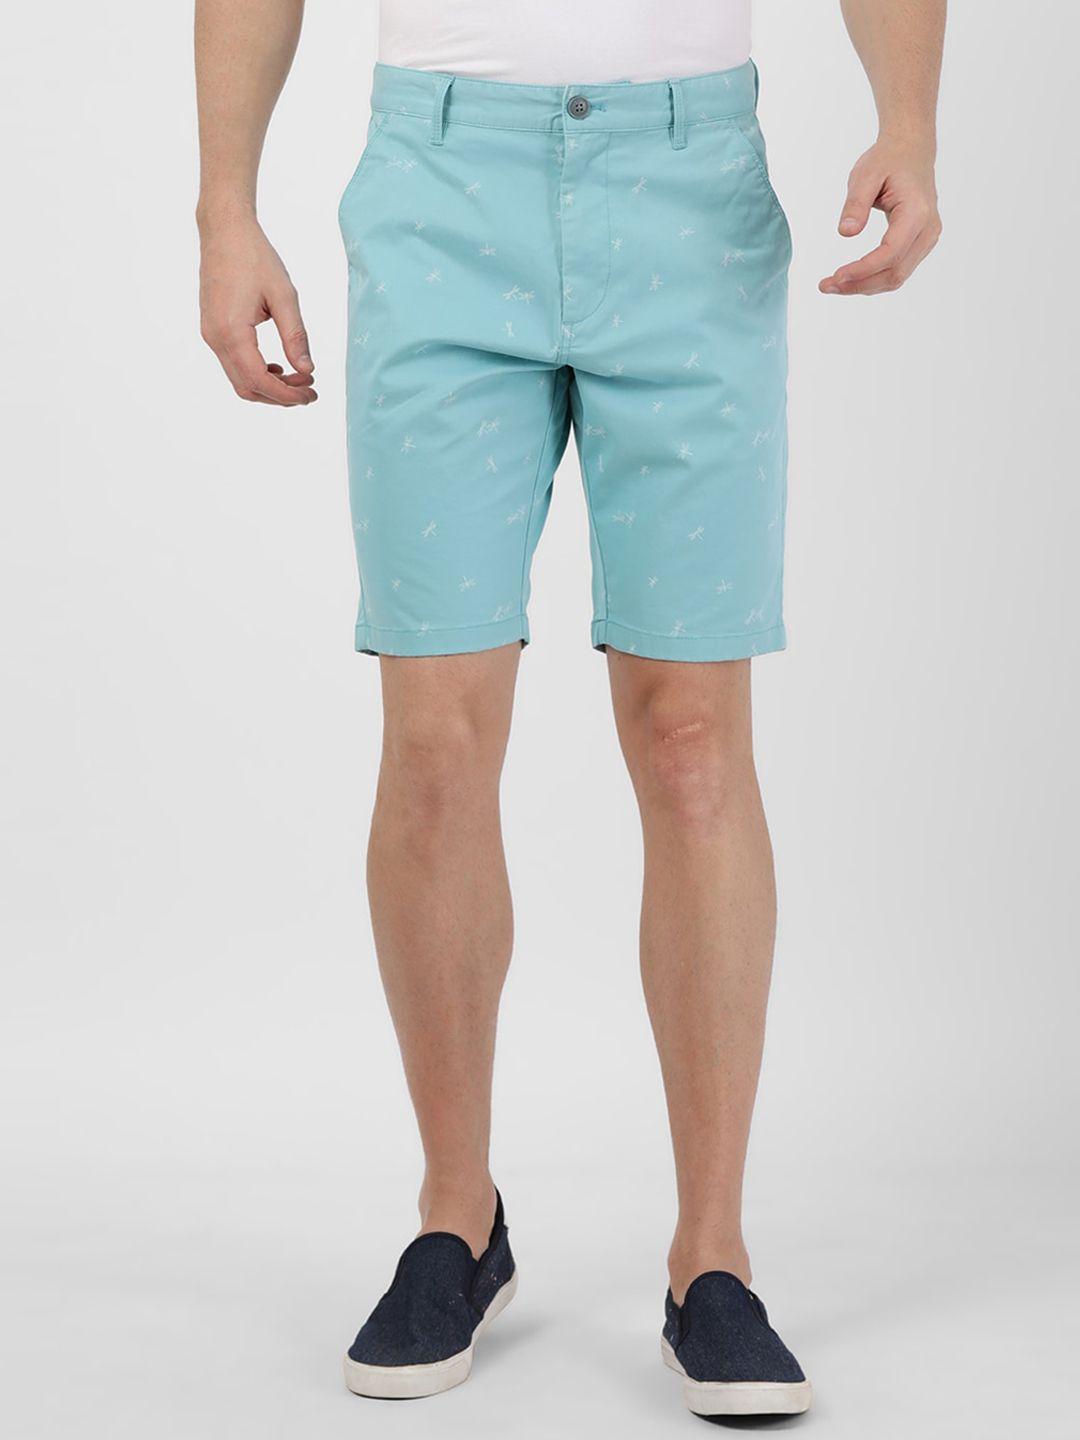 t-base-men-conversational-printed-mid-rise-cotton-chino-shorts